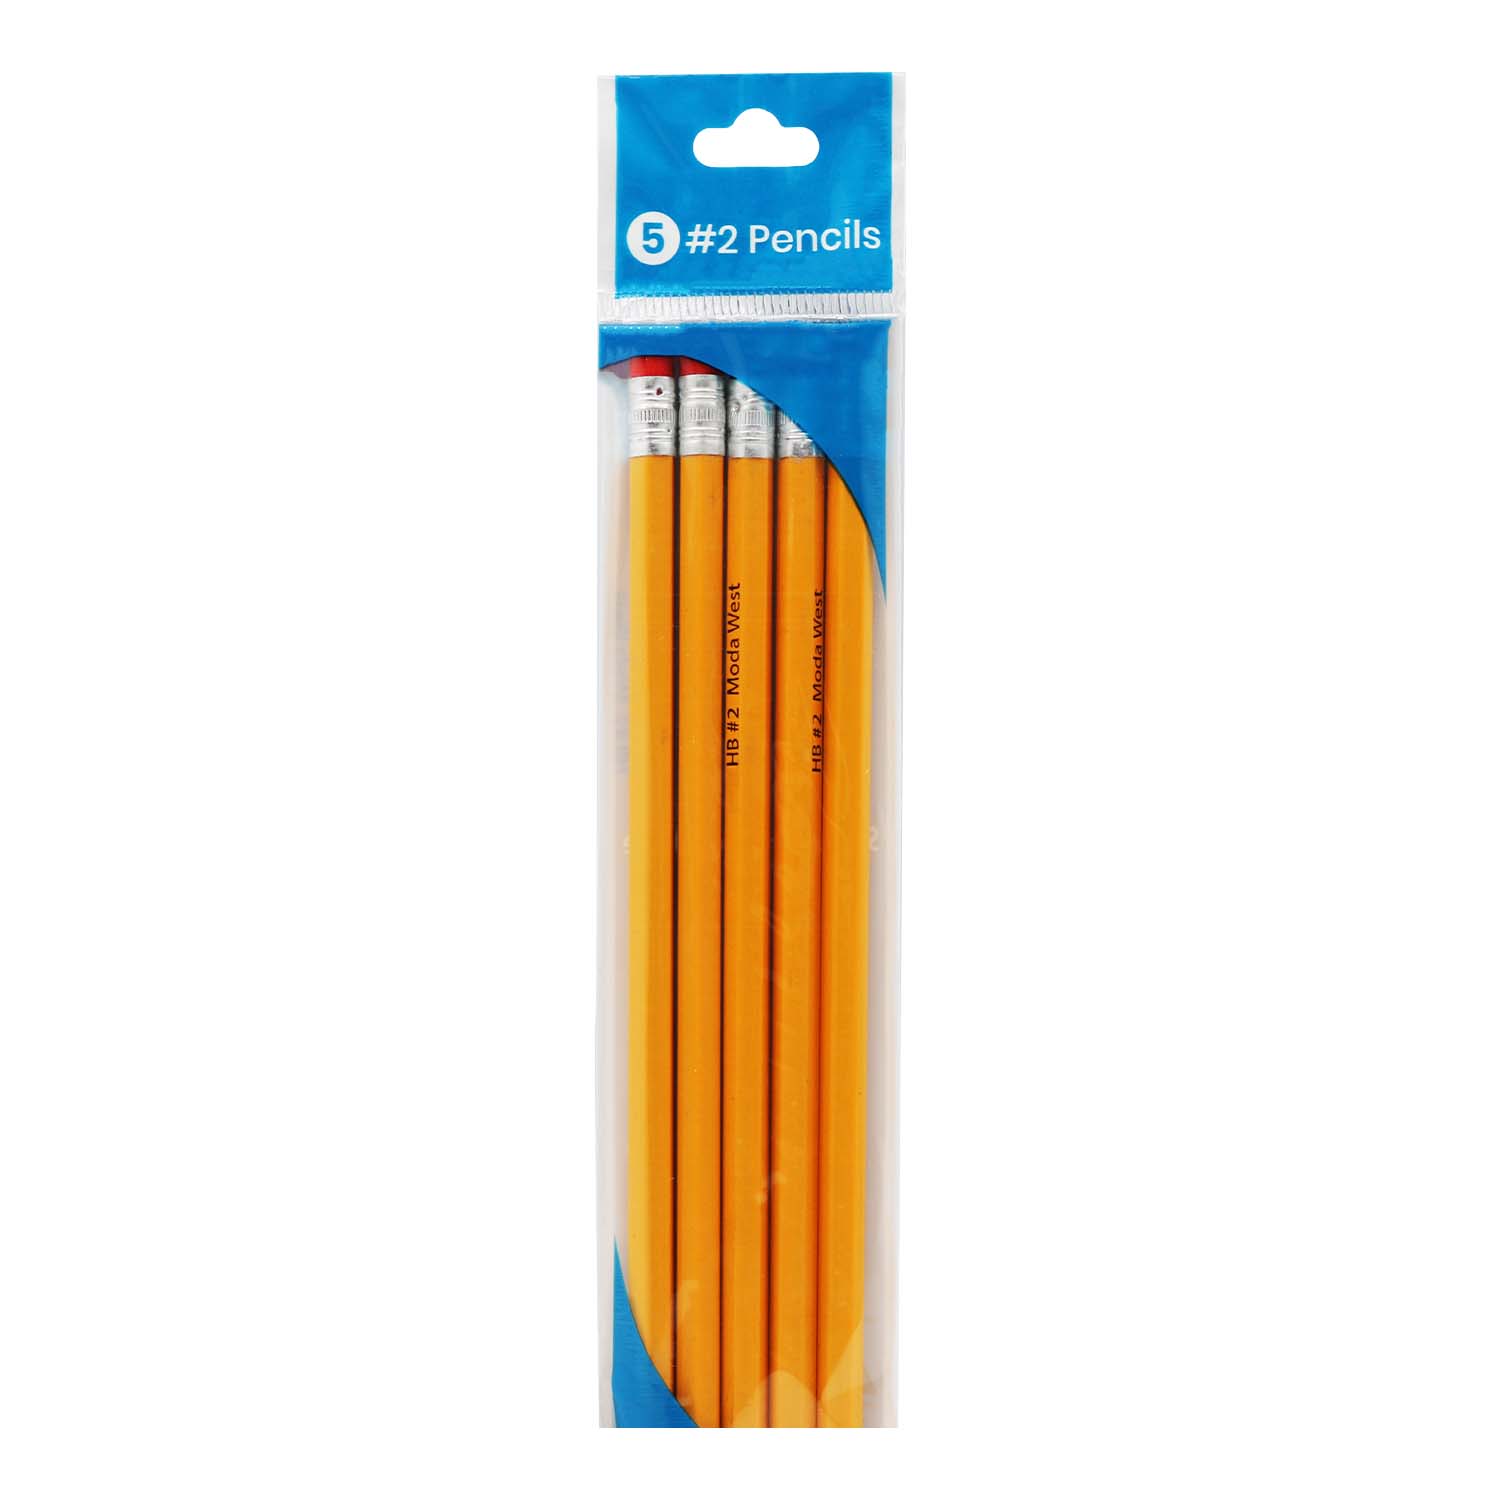 48-Pack of School Scissors - Bulk School Supplies Bundle Essential for  Students and Teachers